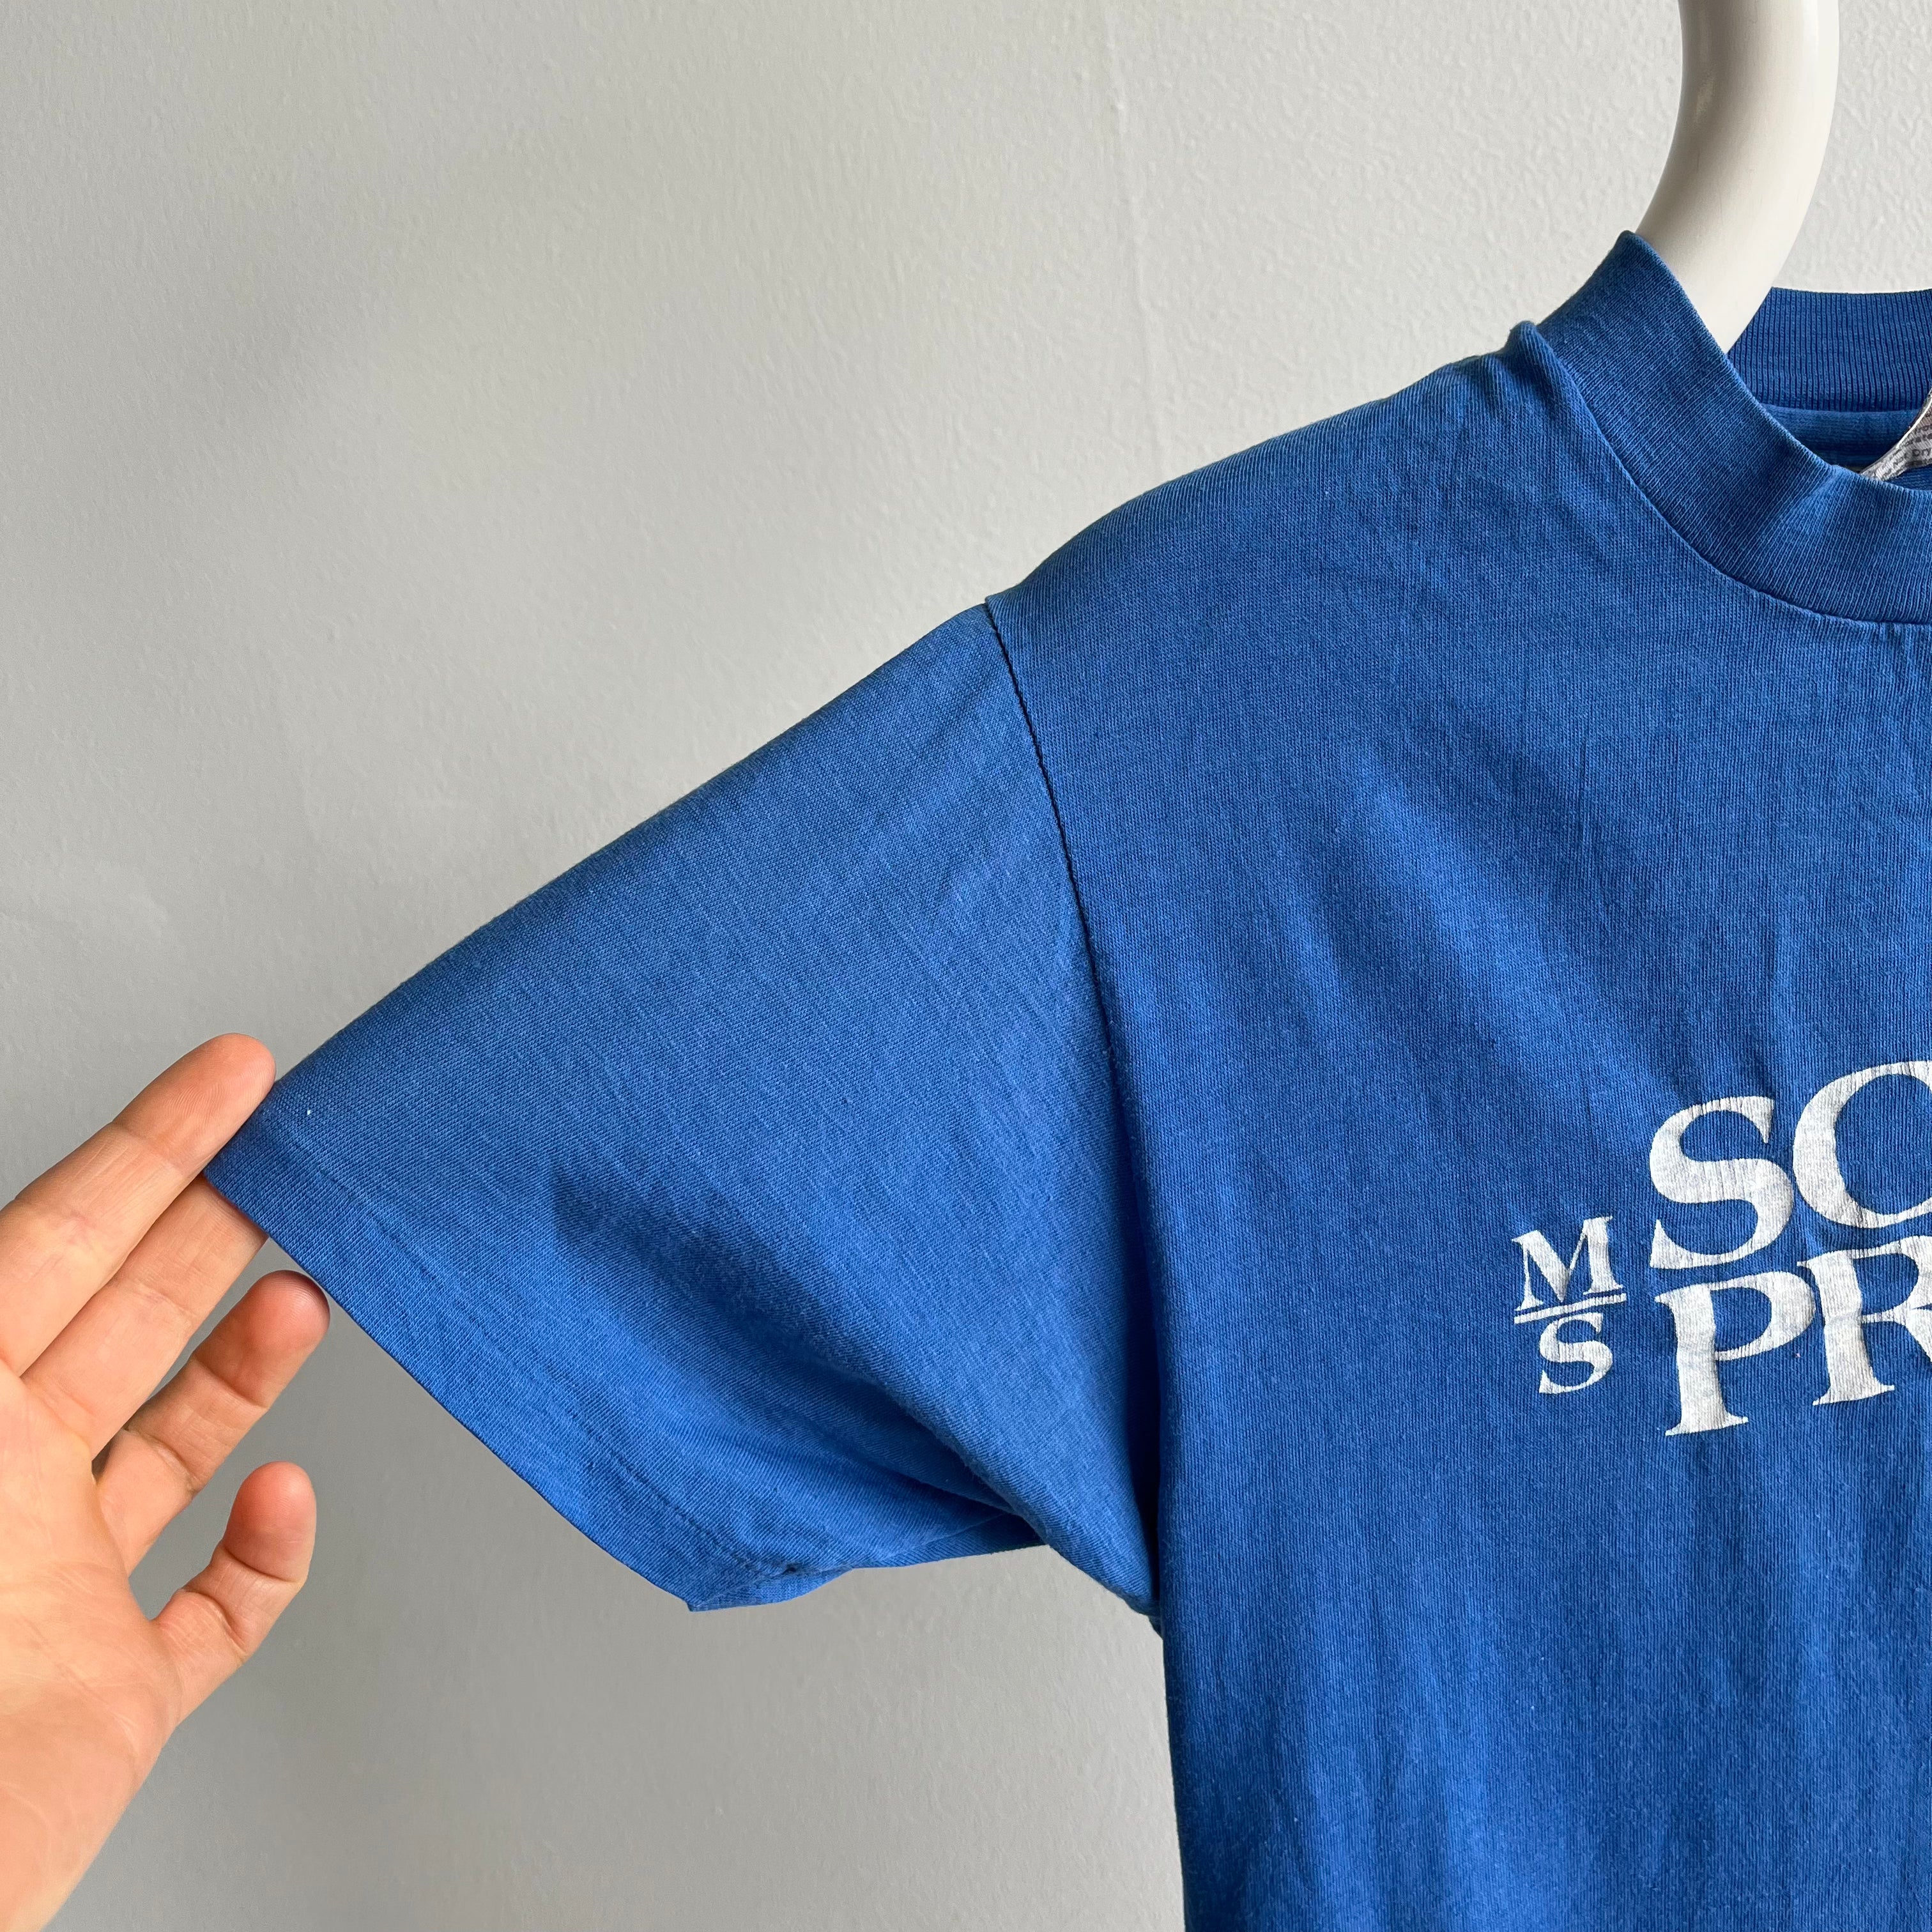 1982 Scotia Prince Cruise T-Shirt